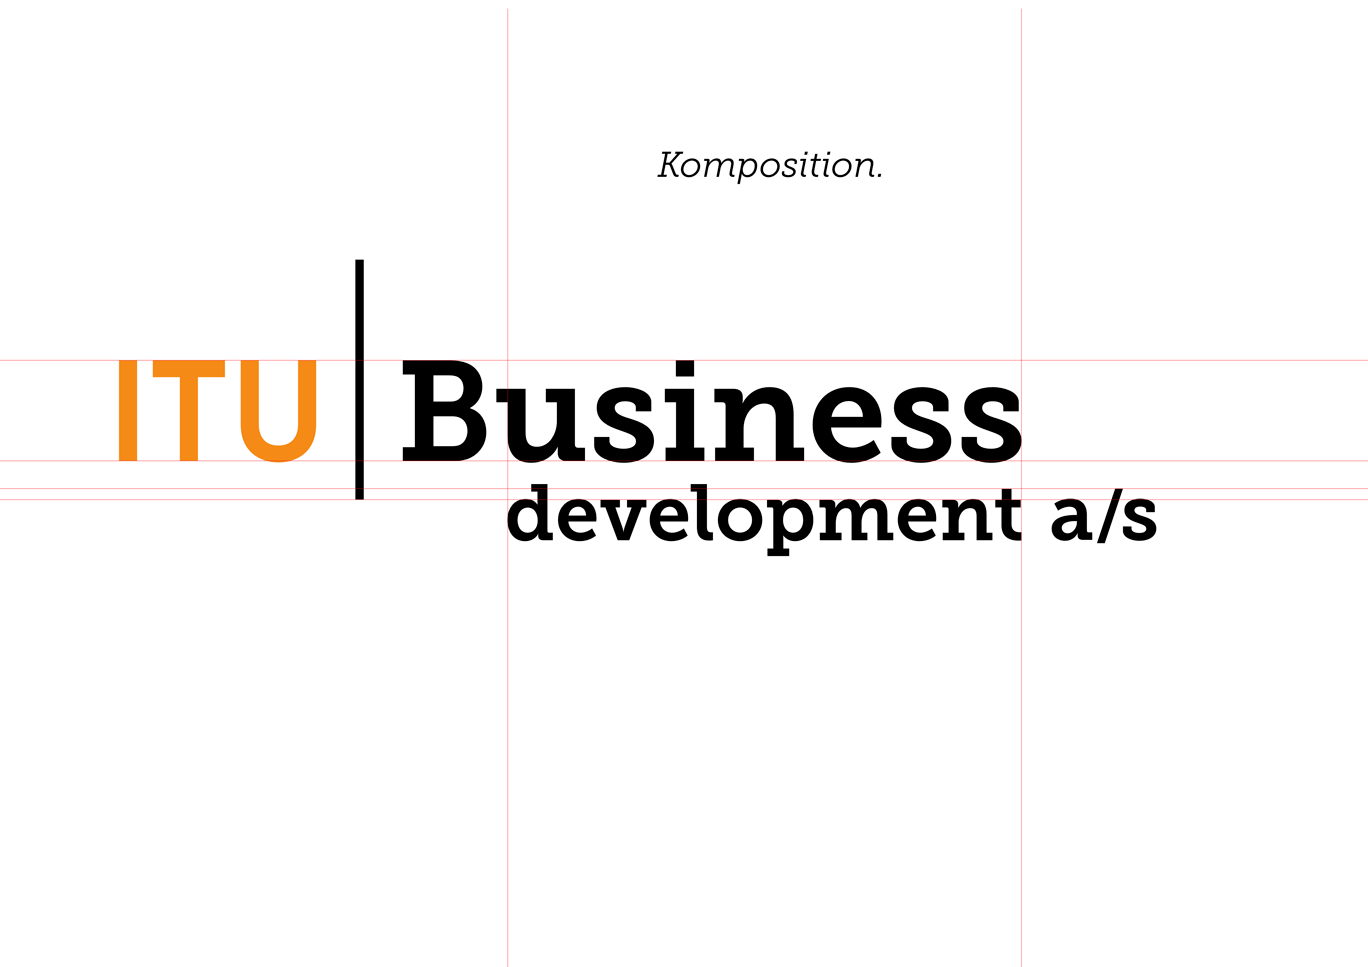 itu-business-department-logo-komposition